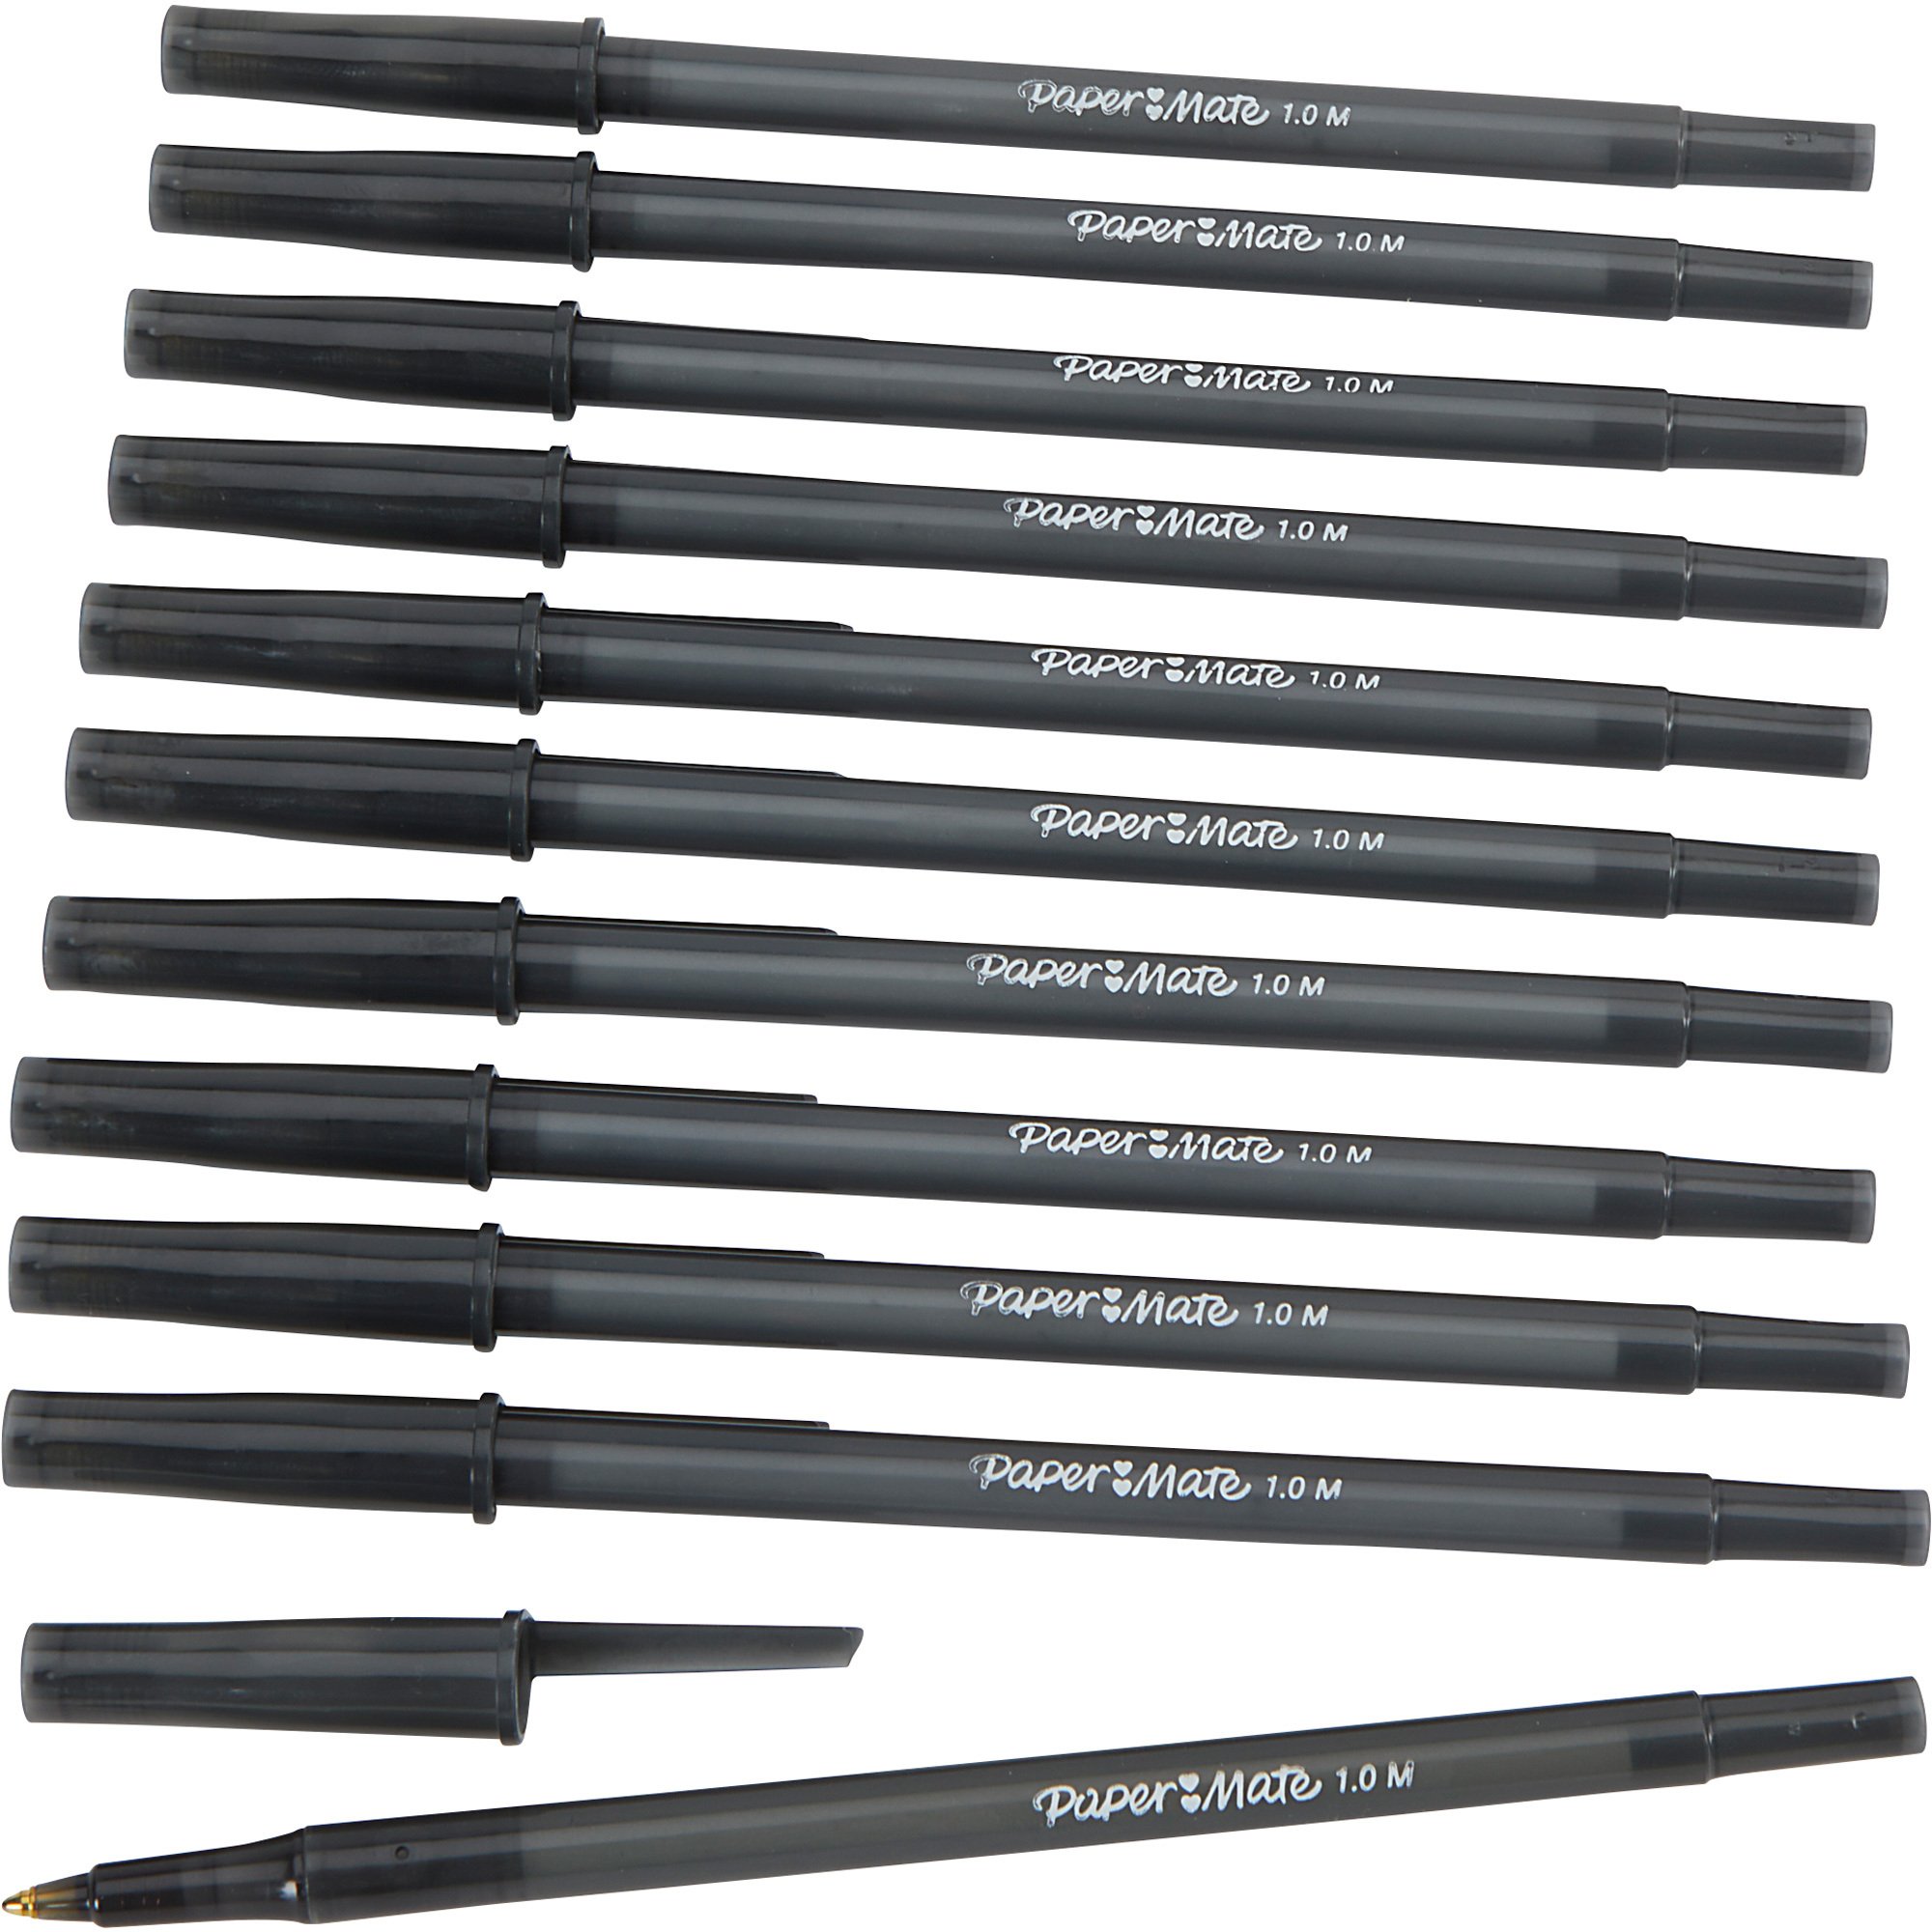 Papermate Ballpoint Pens, Medium Point (1.0mm) — Pack of 11, Black Ink,  Model# 2078058